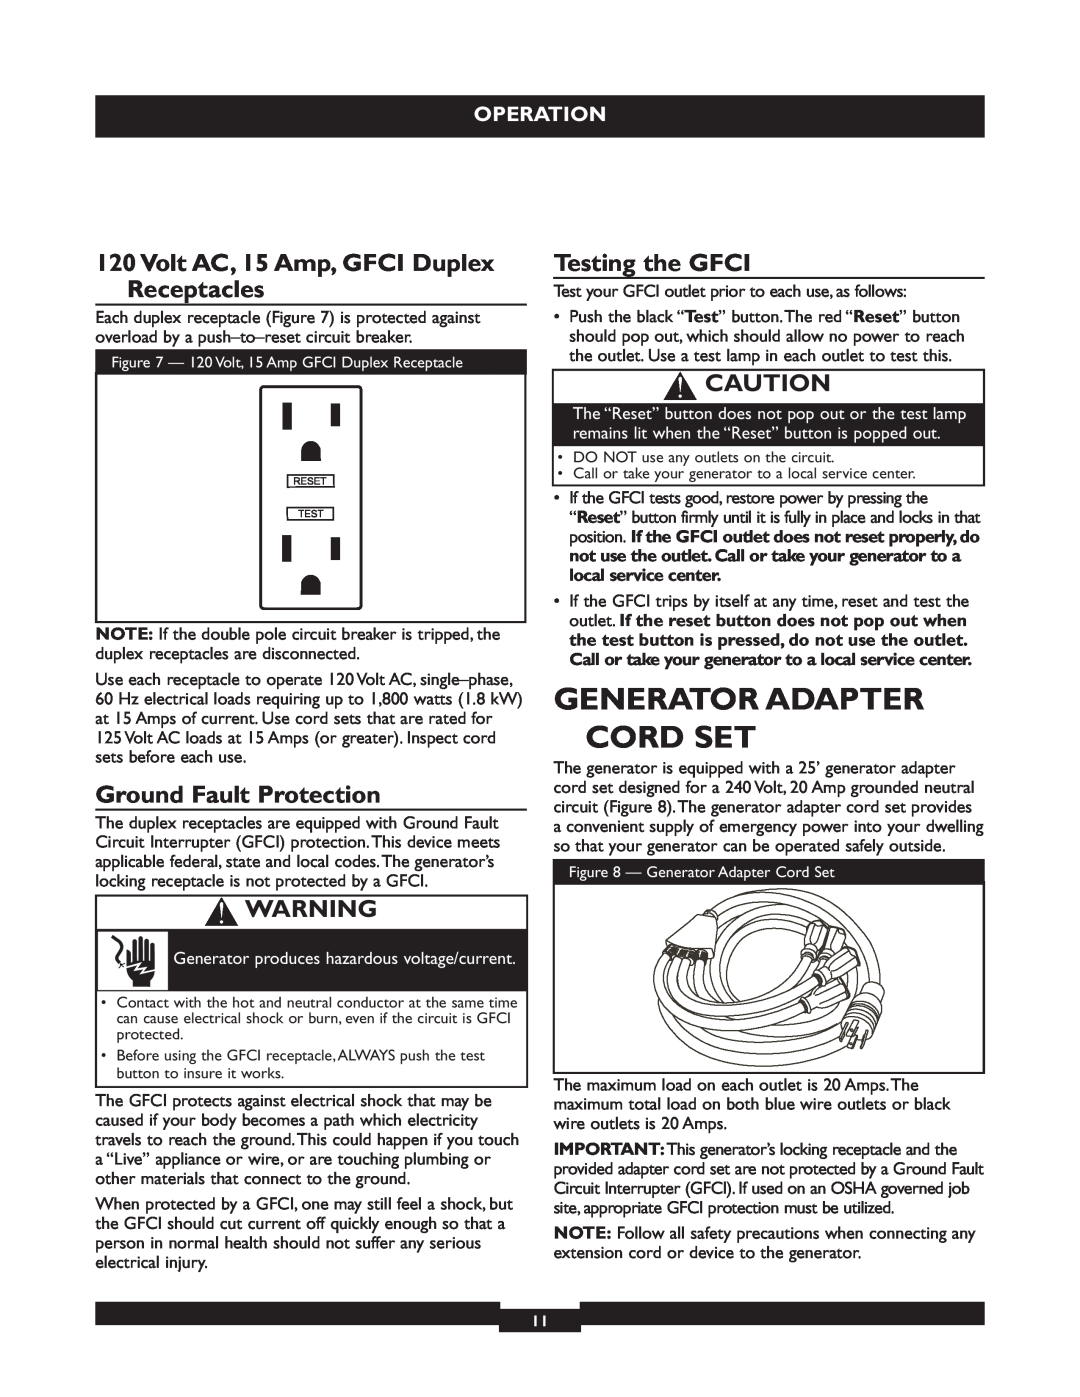 Briggs & Stratton 30236 Generator Adapter Cord Set, Volt AC, 15 Amp, GFCI Duplex Receptacles, Ground Fault Protection 